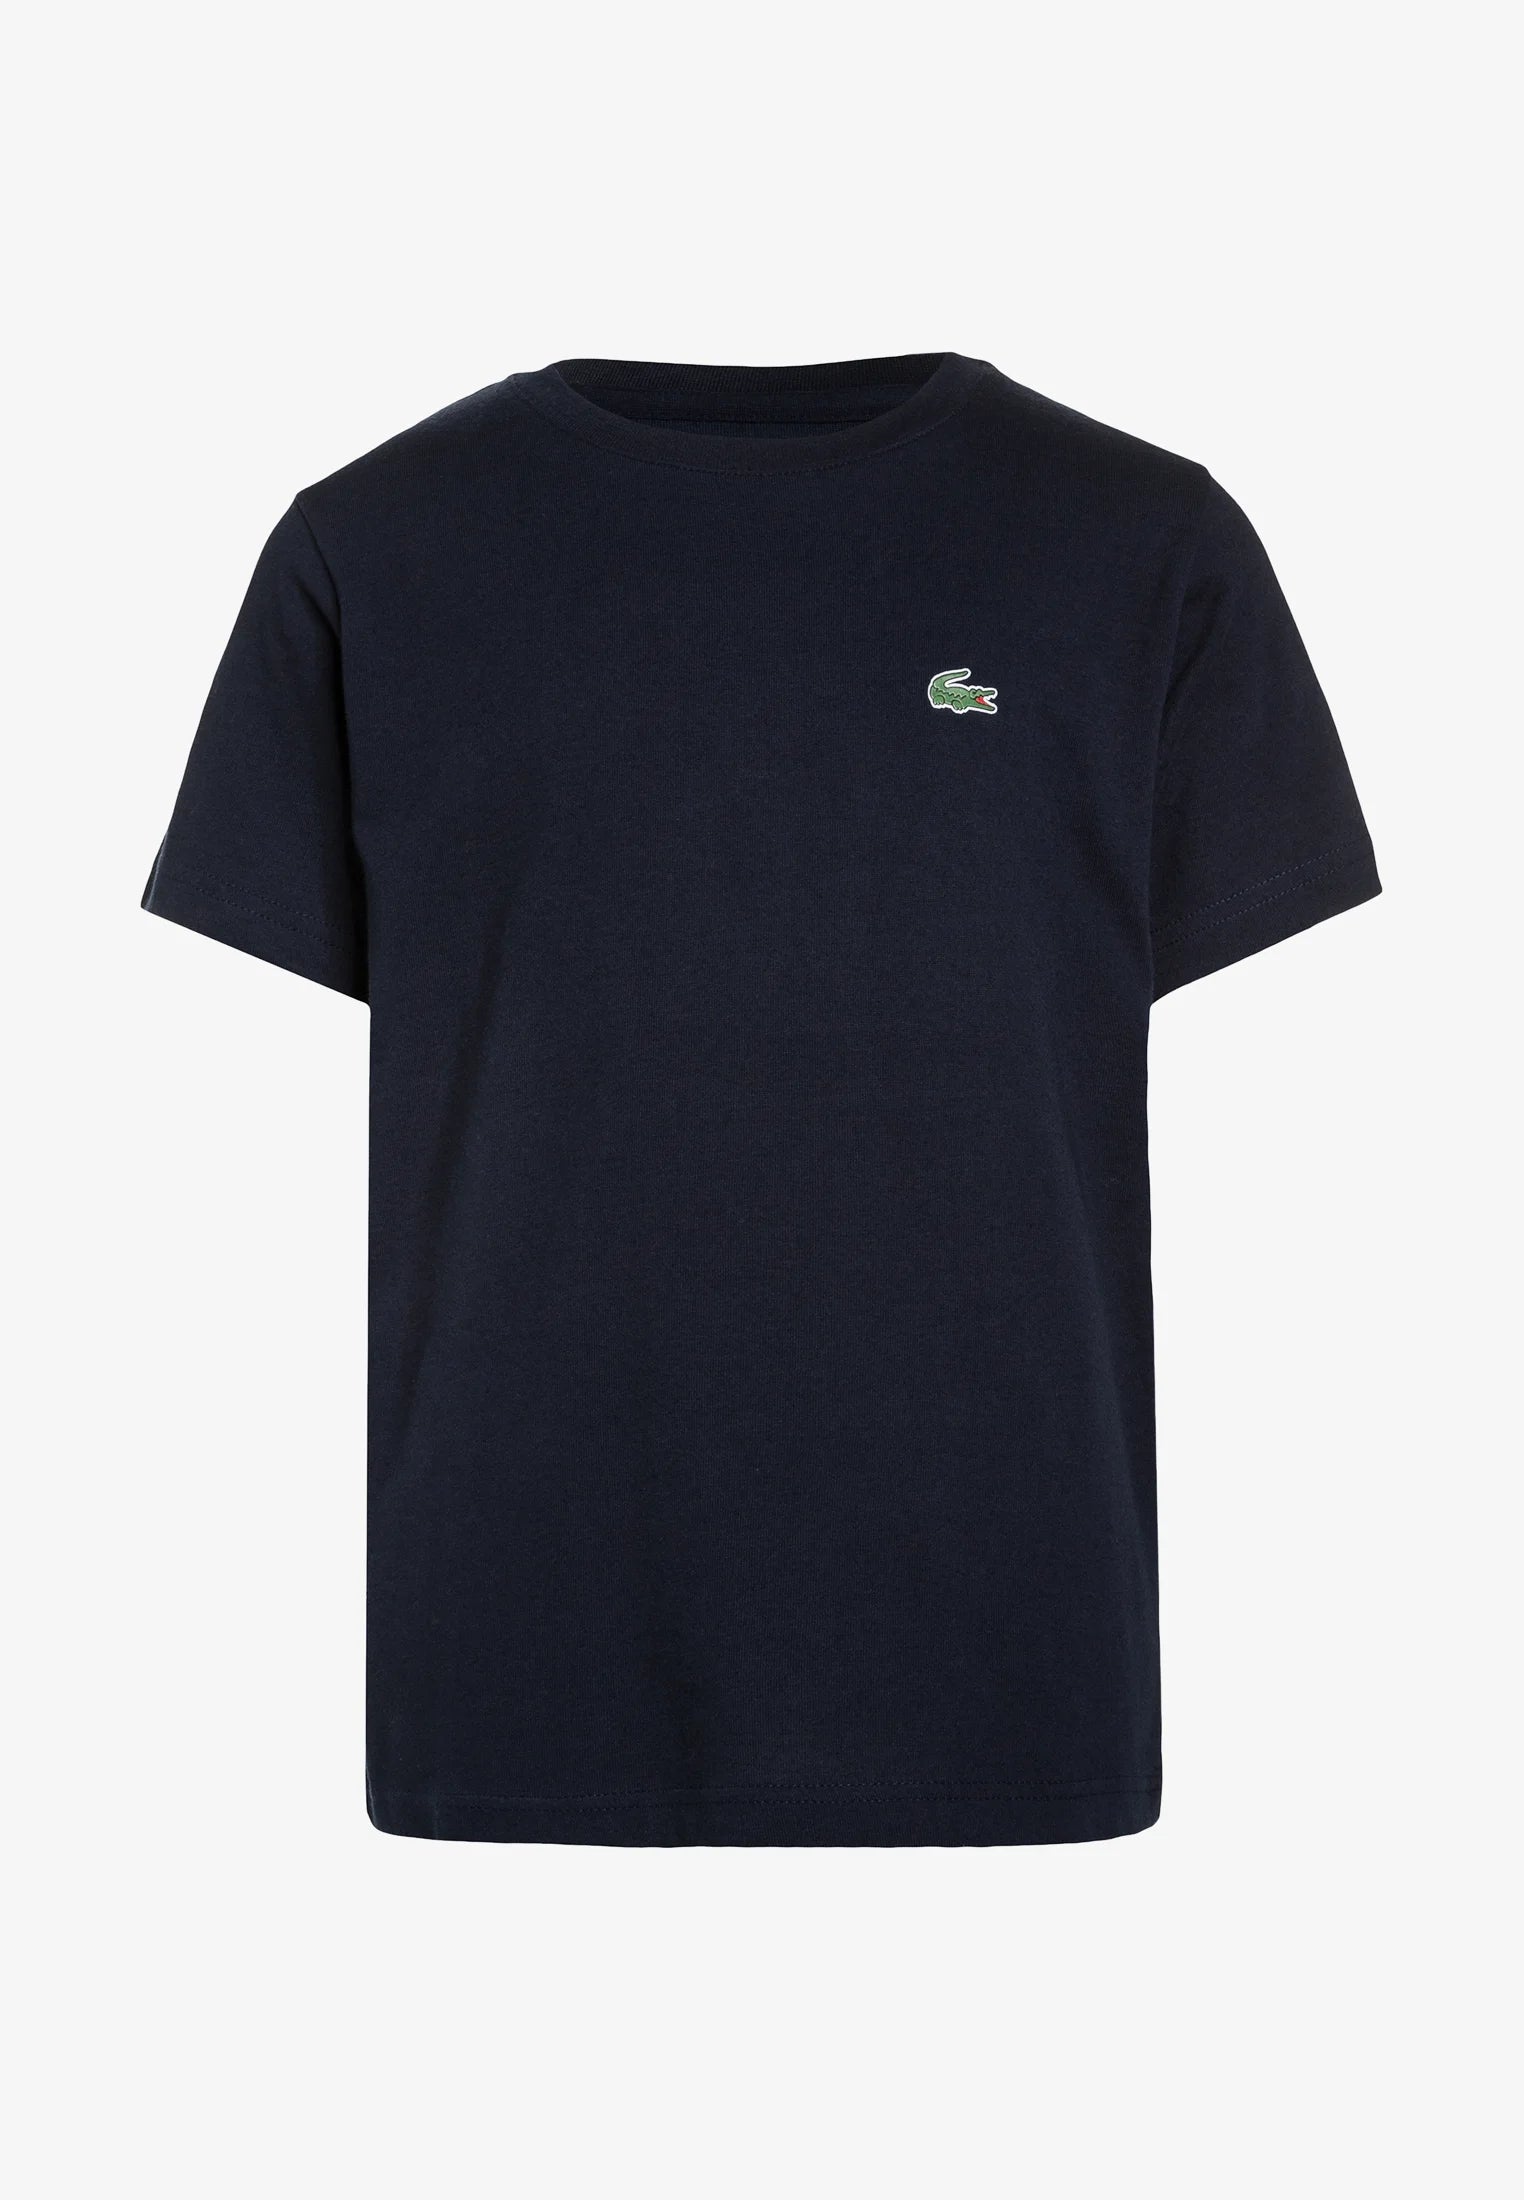 Tee-shirt Lacoste Junior Marine - TJ881100166